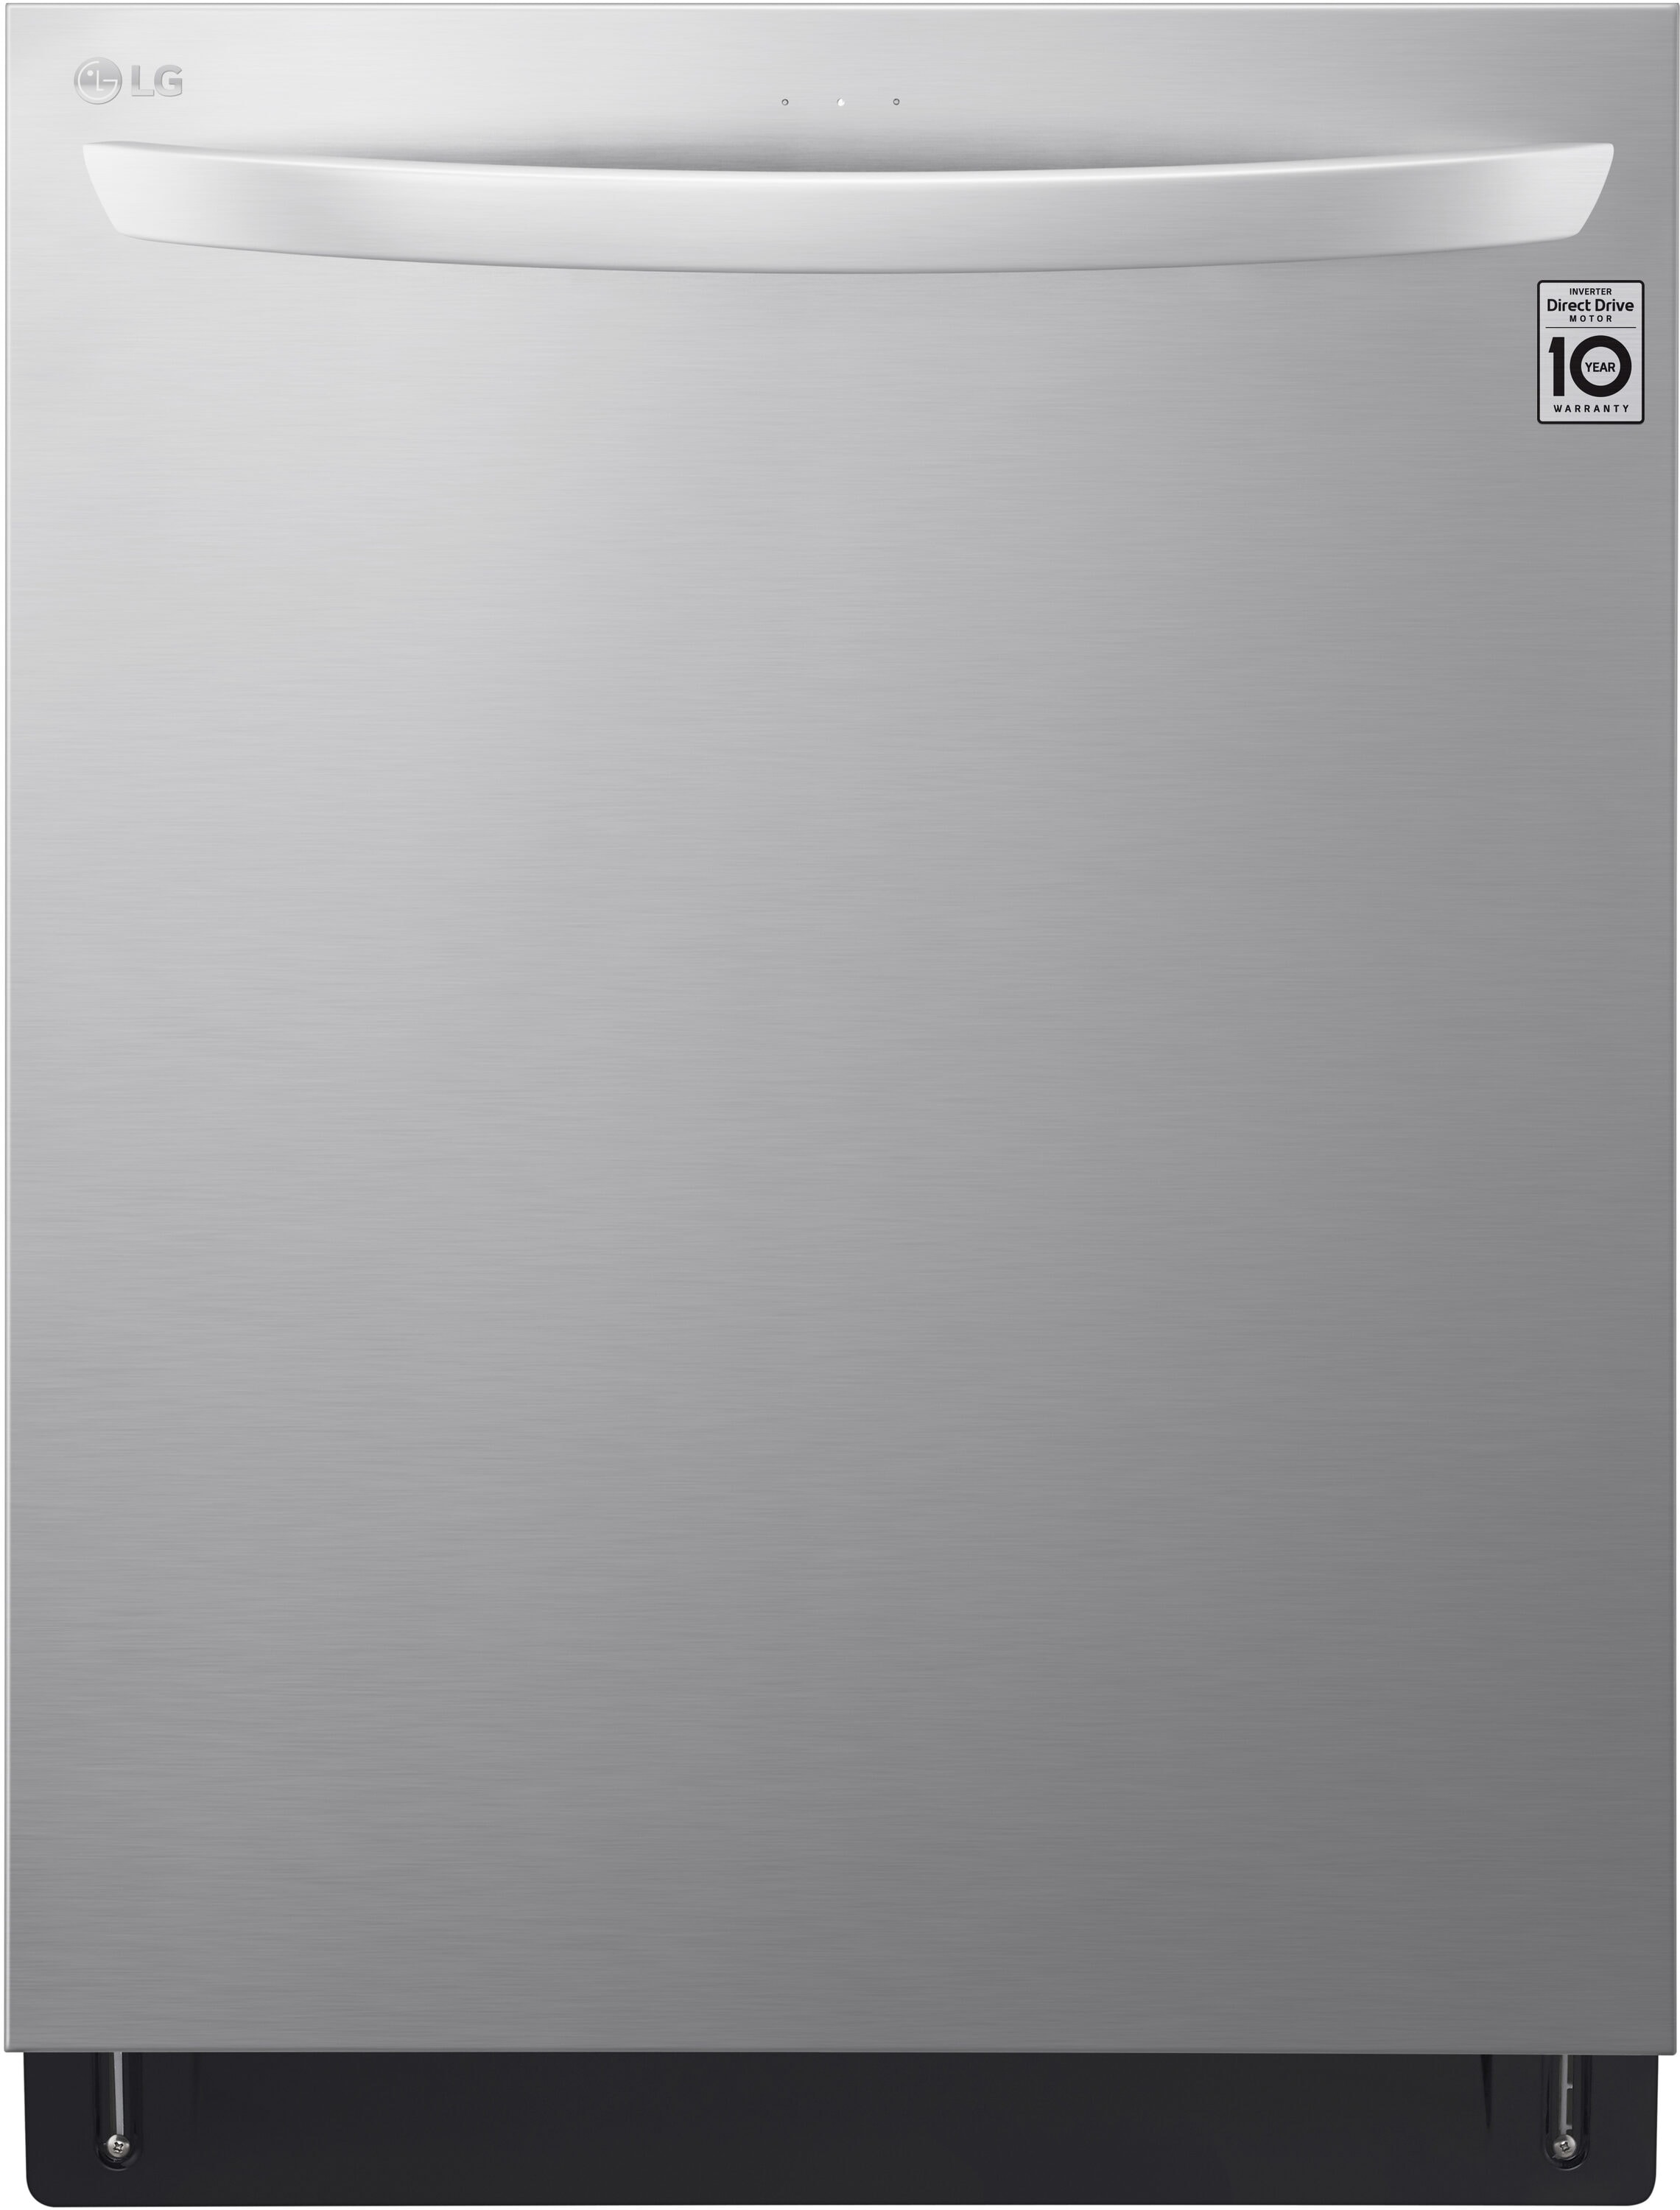 LG Dishwasher - Understanding Control Panel Indicators